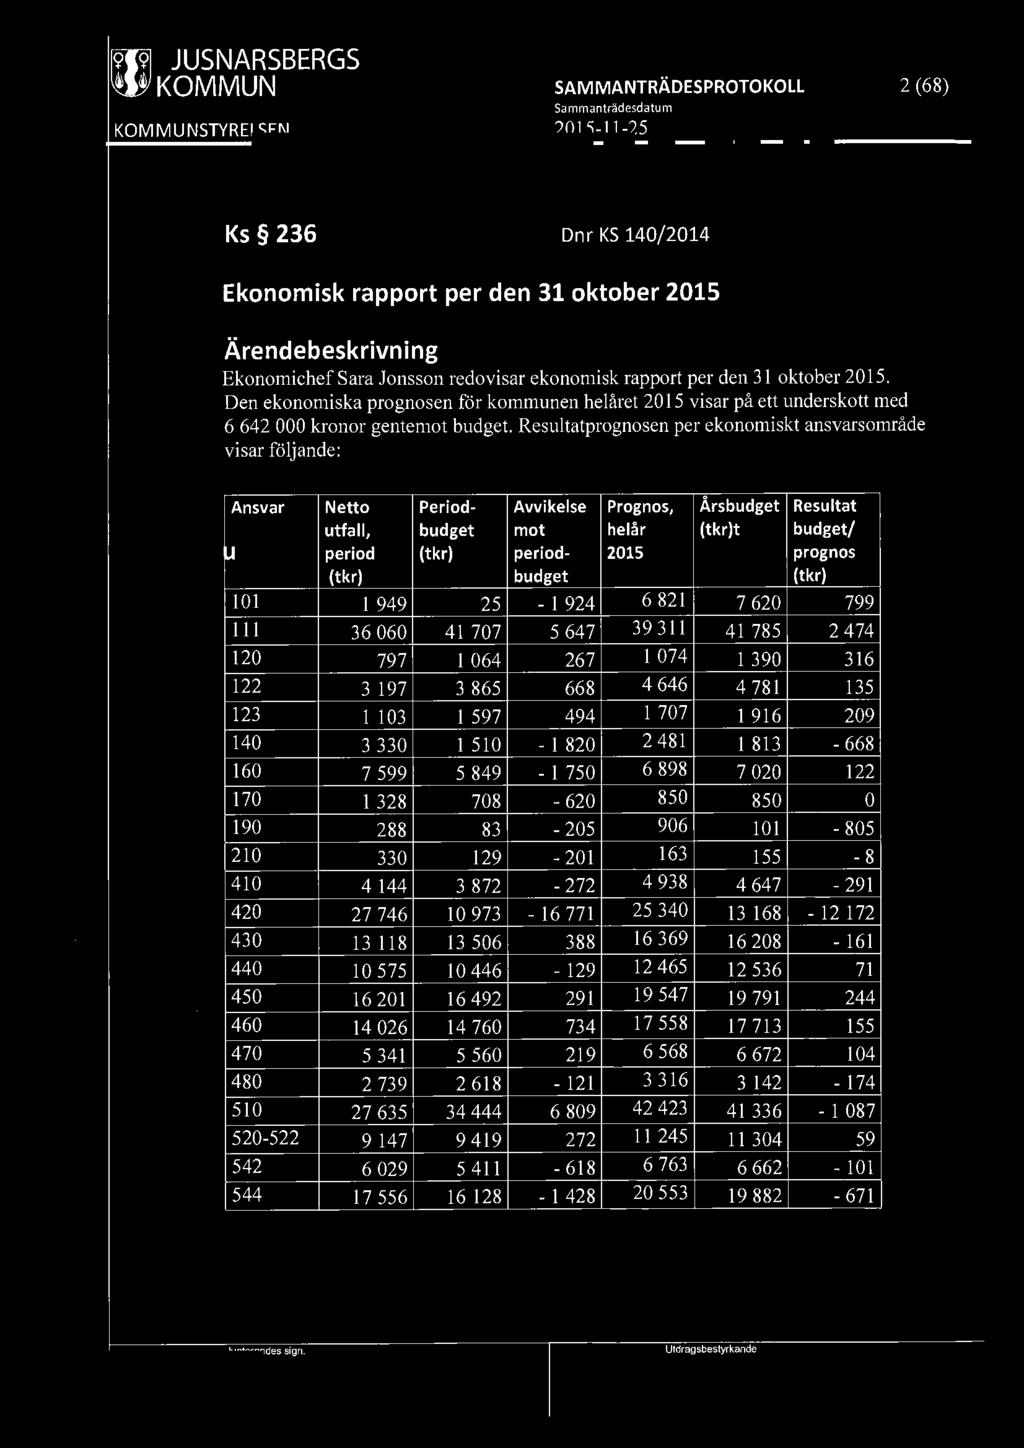 19191 LJUSNARSBERGS W/KOMMUN Sa mmanträdesdatu m 2 (68) Ks 236 Dnr KS 140/2014 Ekonomisk rapport per den 31 oktober 2015 Ekonomichef Sara Jonsson redovisar ekonomisk rapport per den 31 oktober 2015.